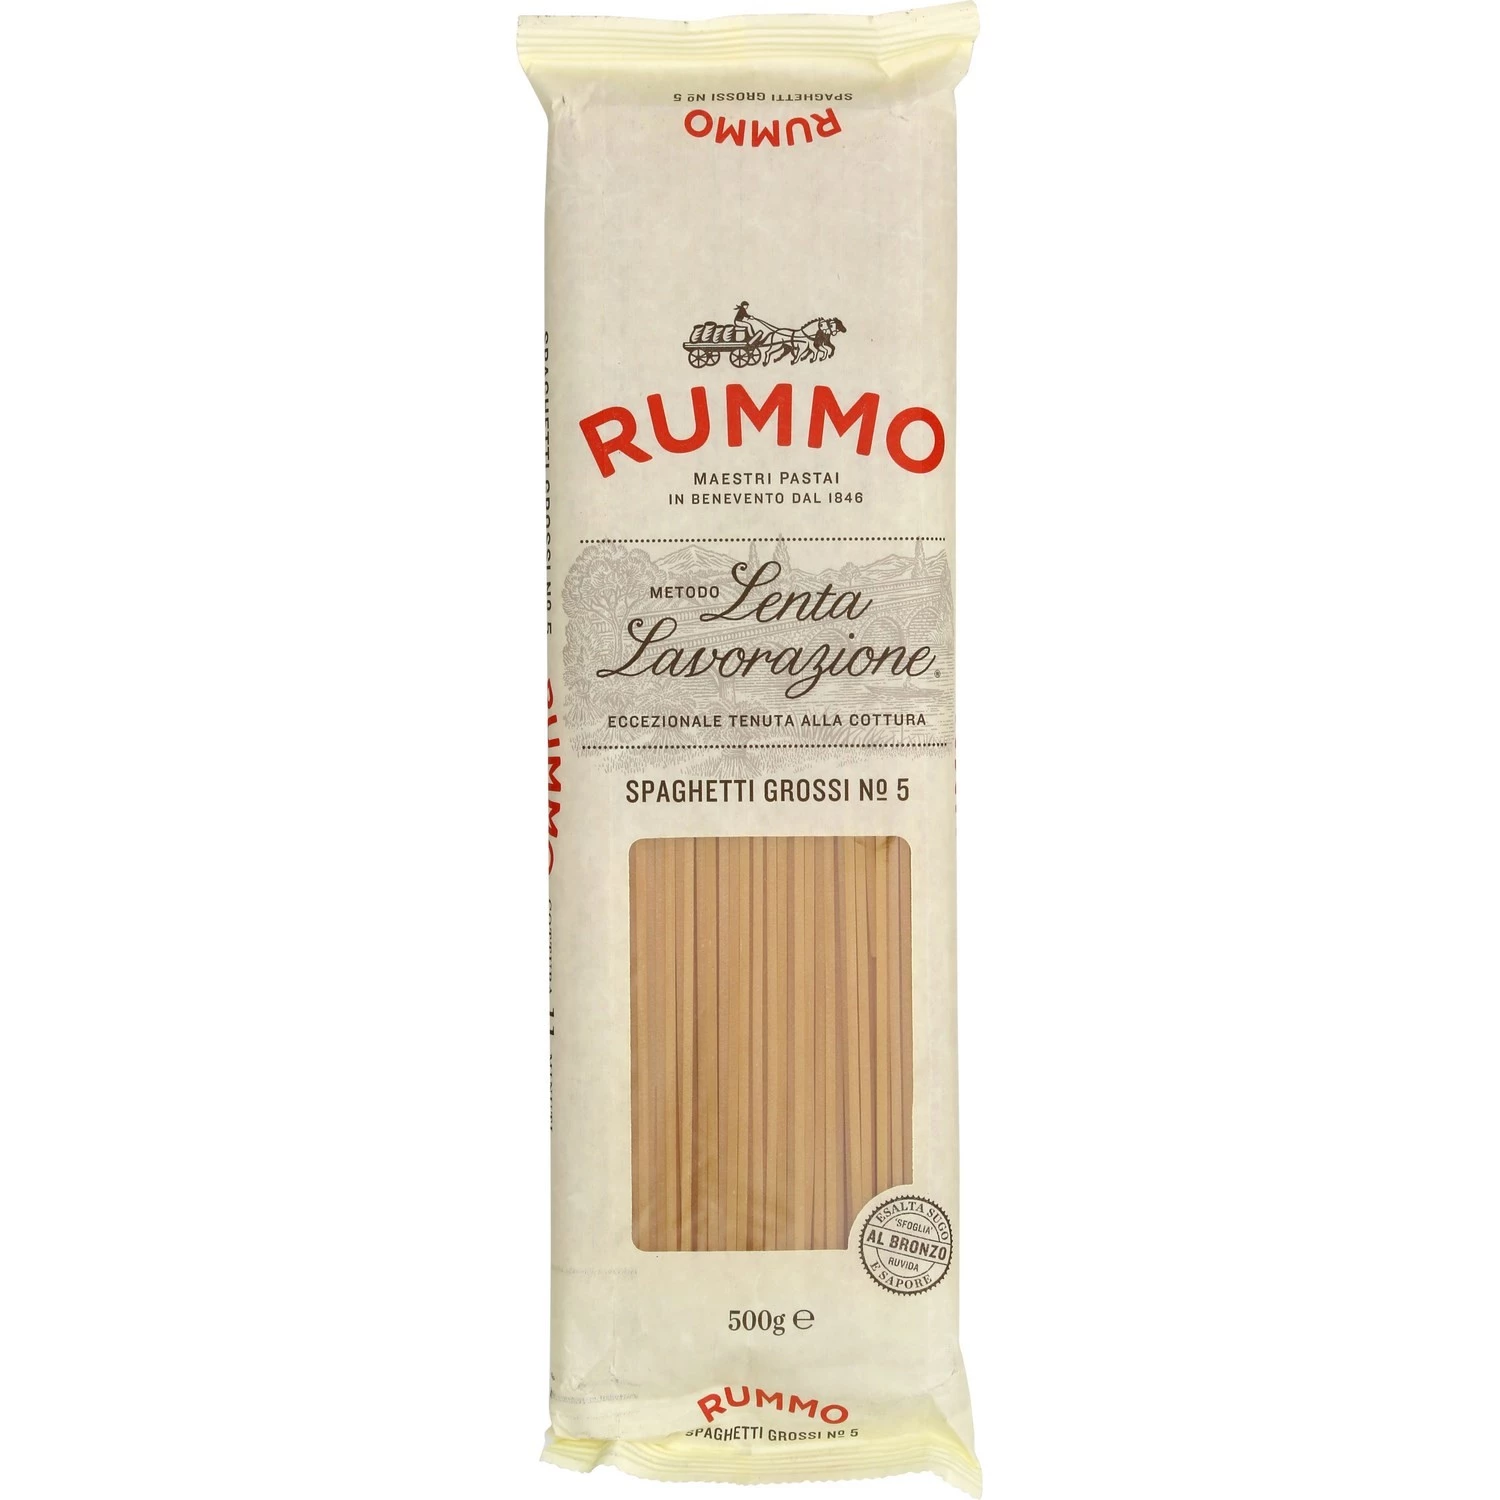 Spaghetti Grossi n°5, 500g - RUMMO